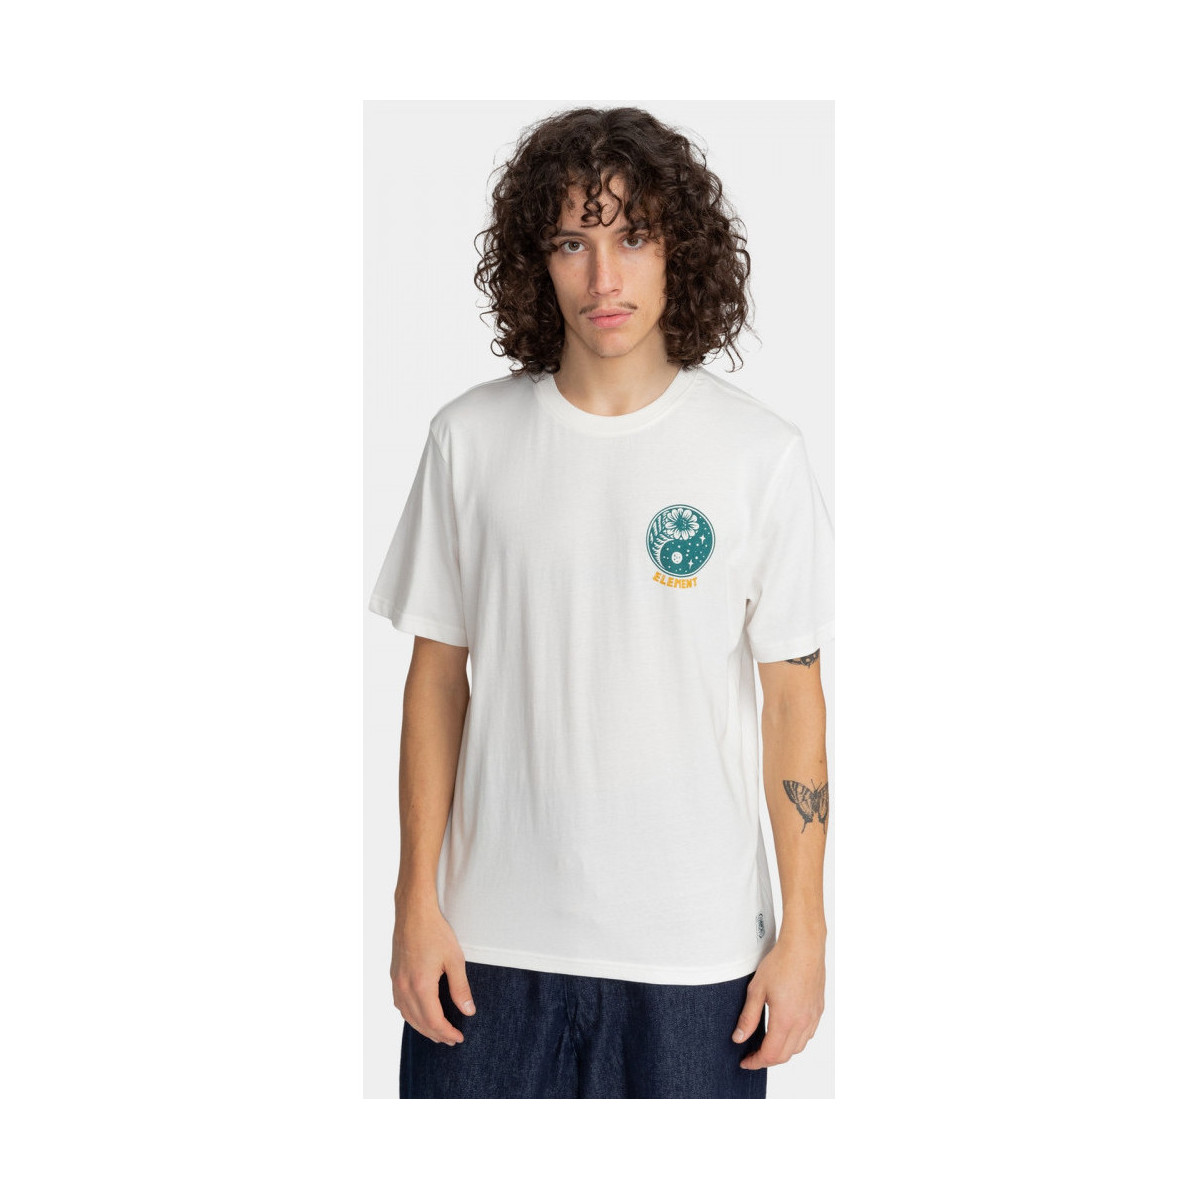 Textiel Heren T-shirts & Polo’s Element Balance Wit